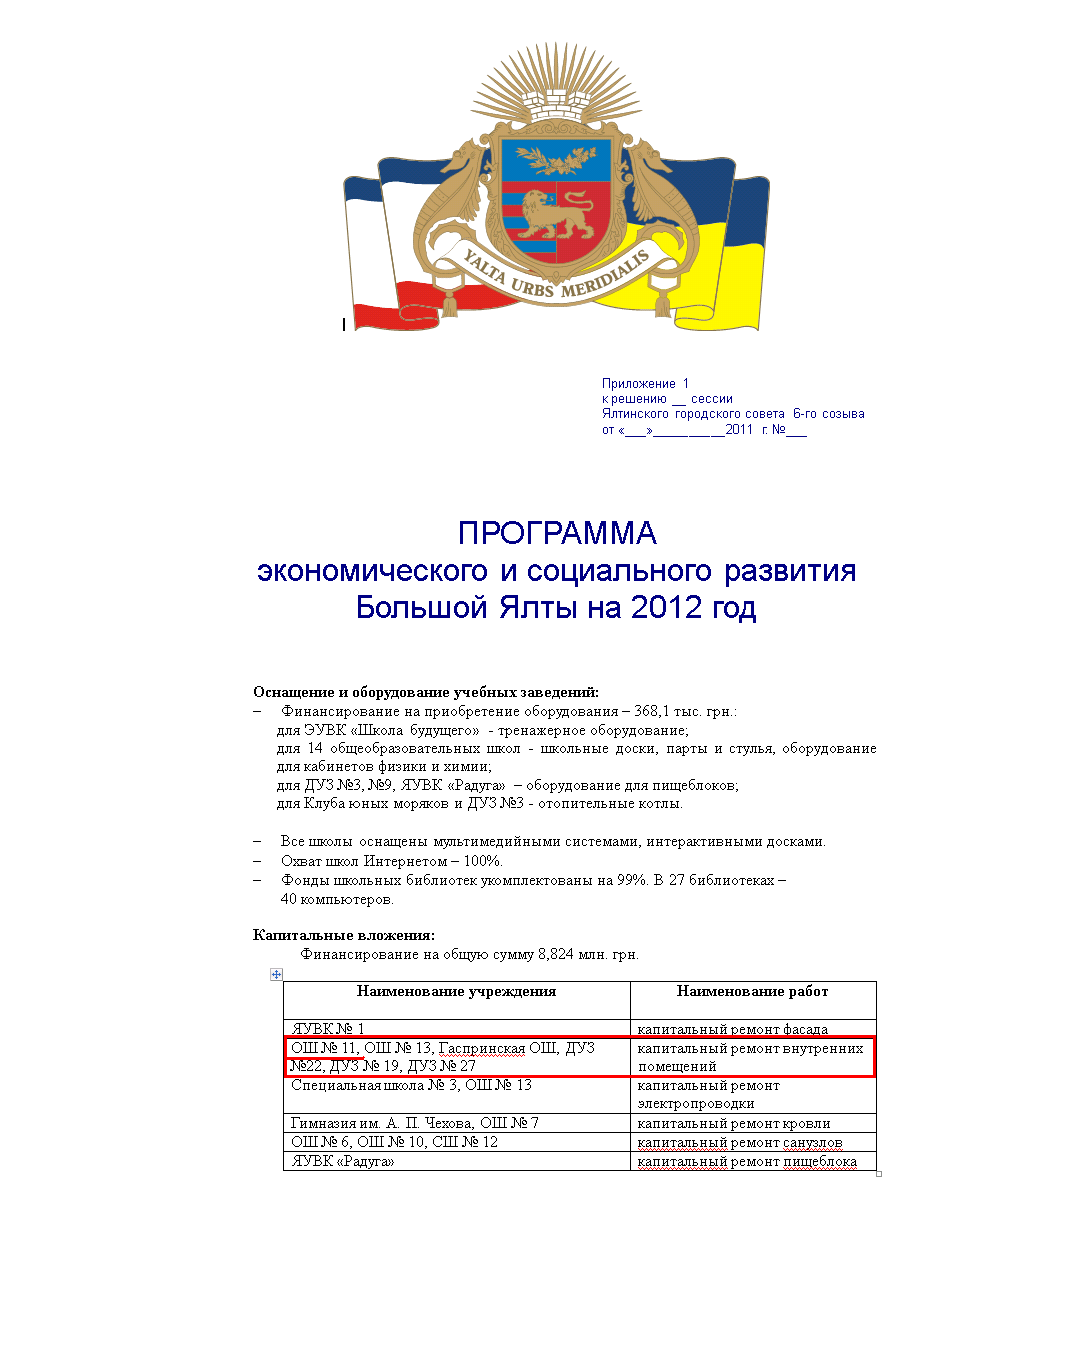 http://yalta-gs.gov.ua/programs/3324--2012-